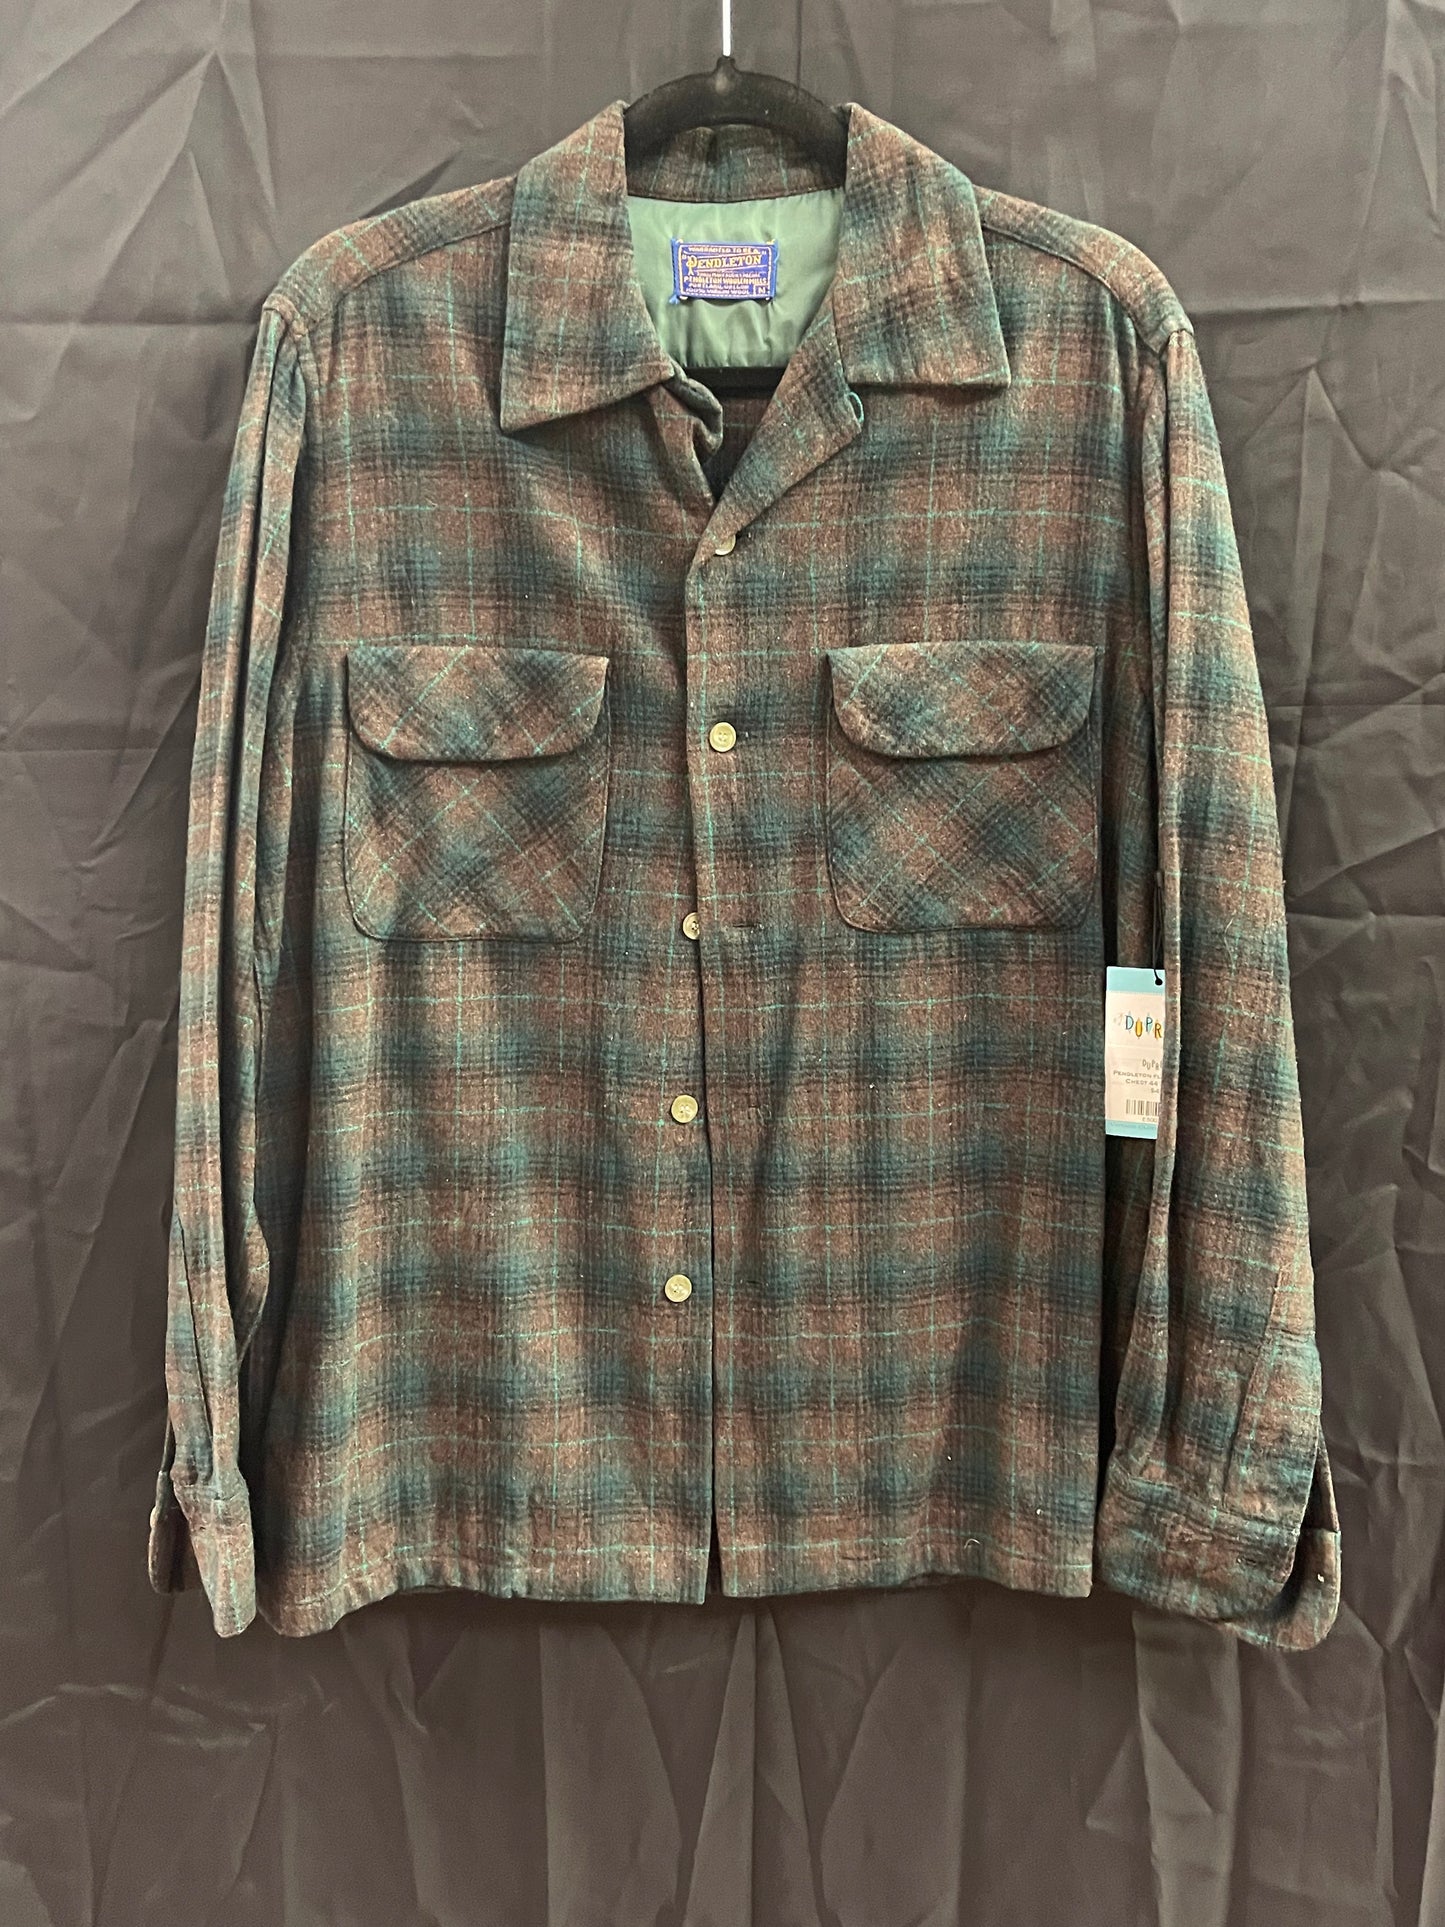 Pendleton Flannel Shirt